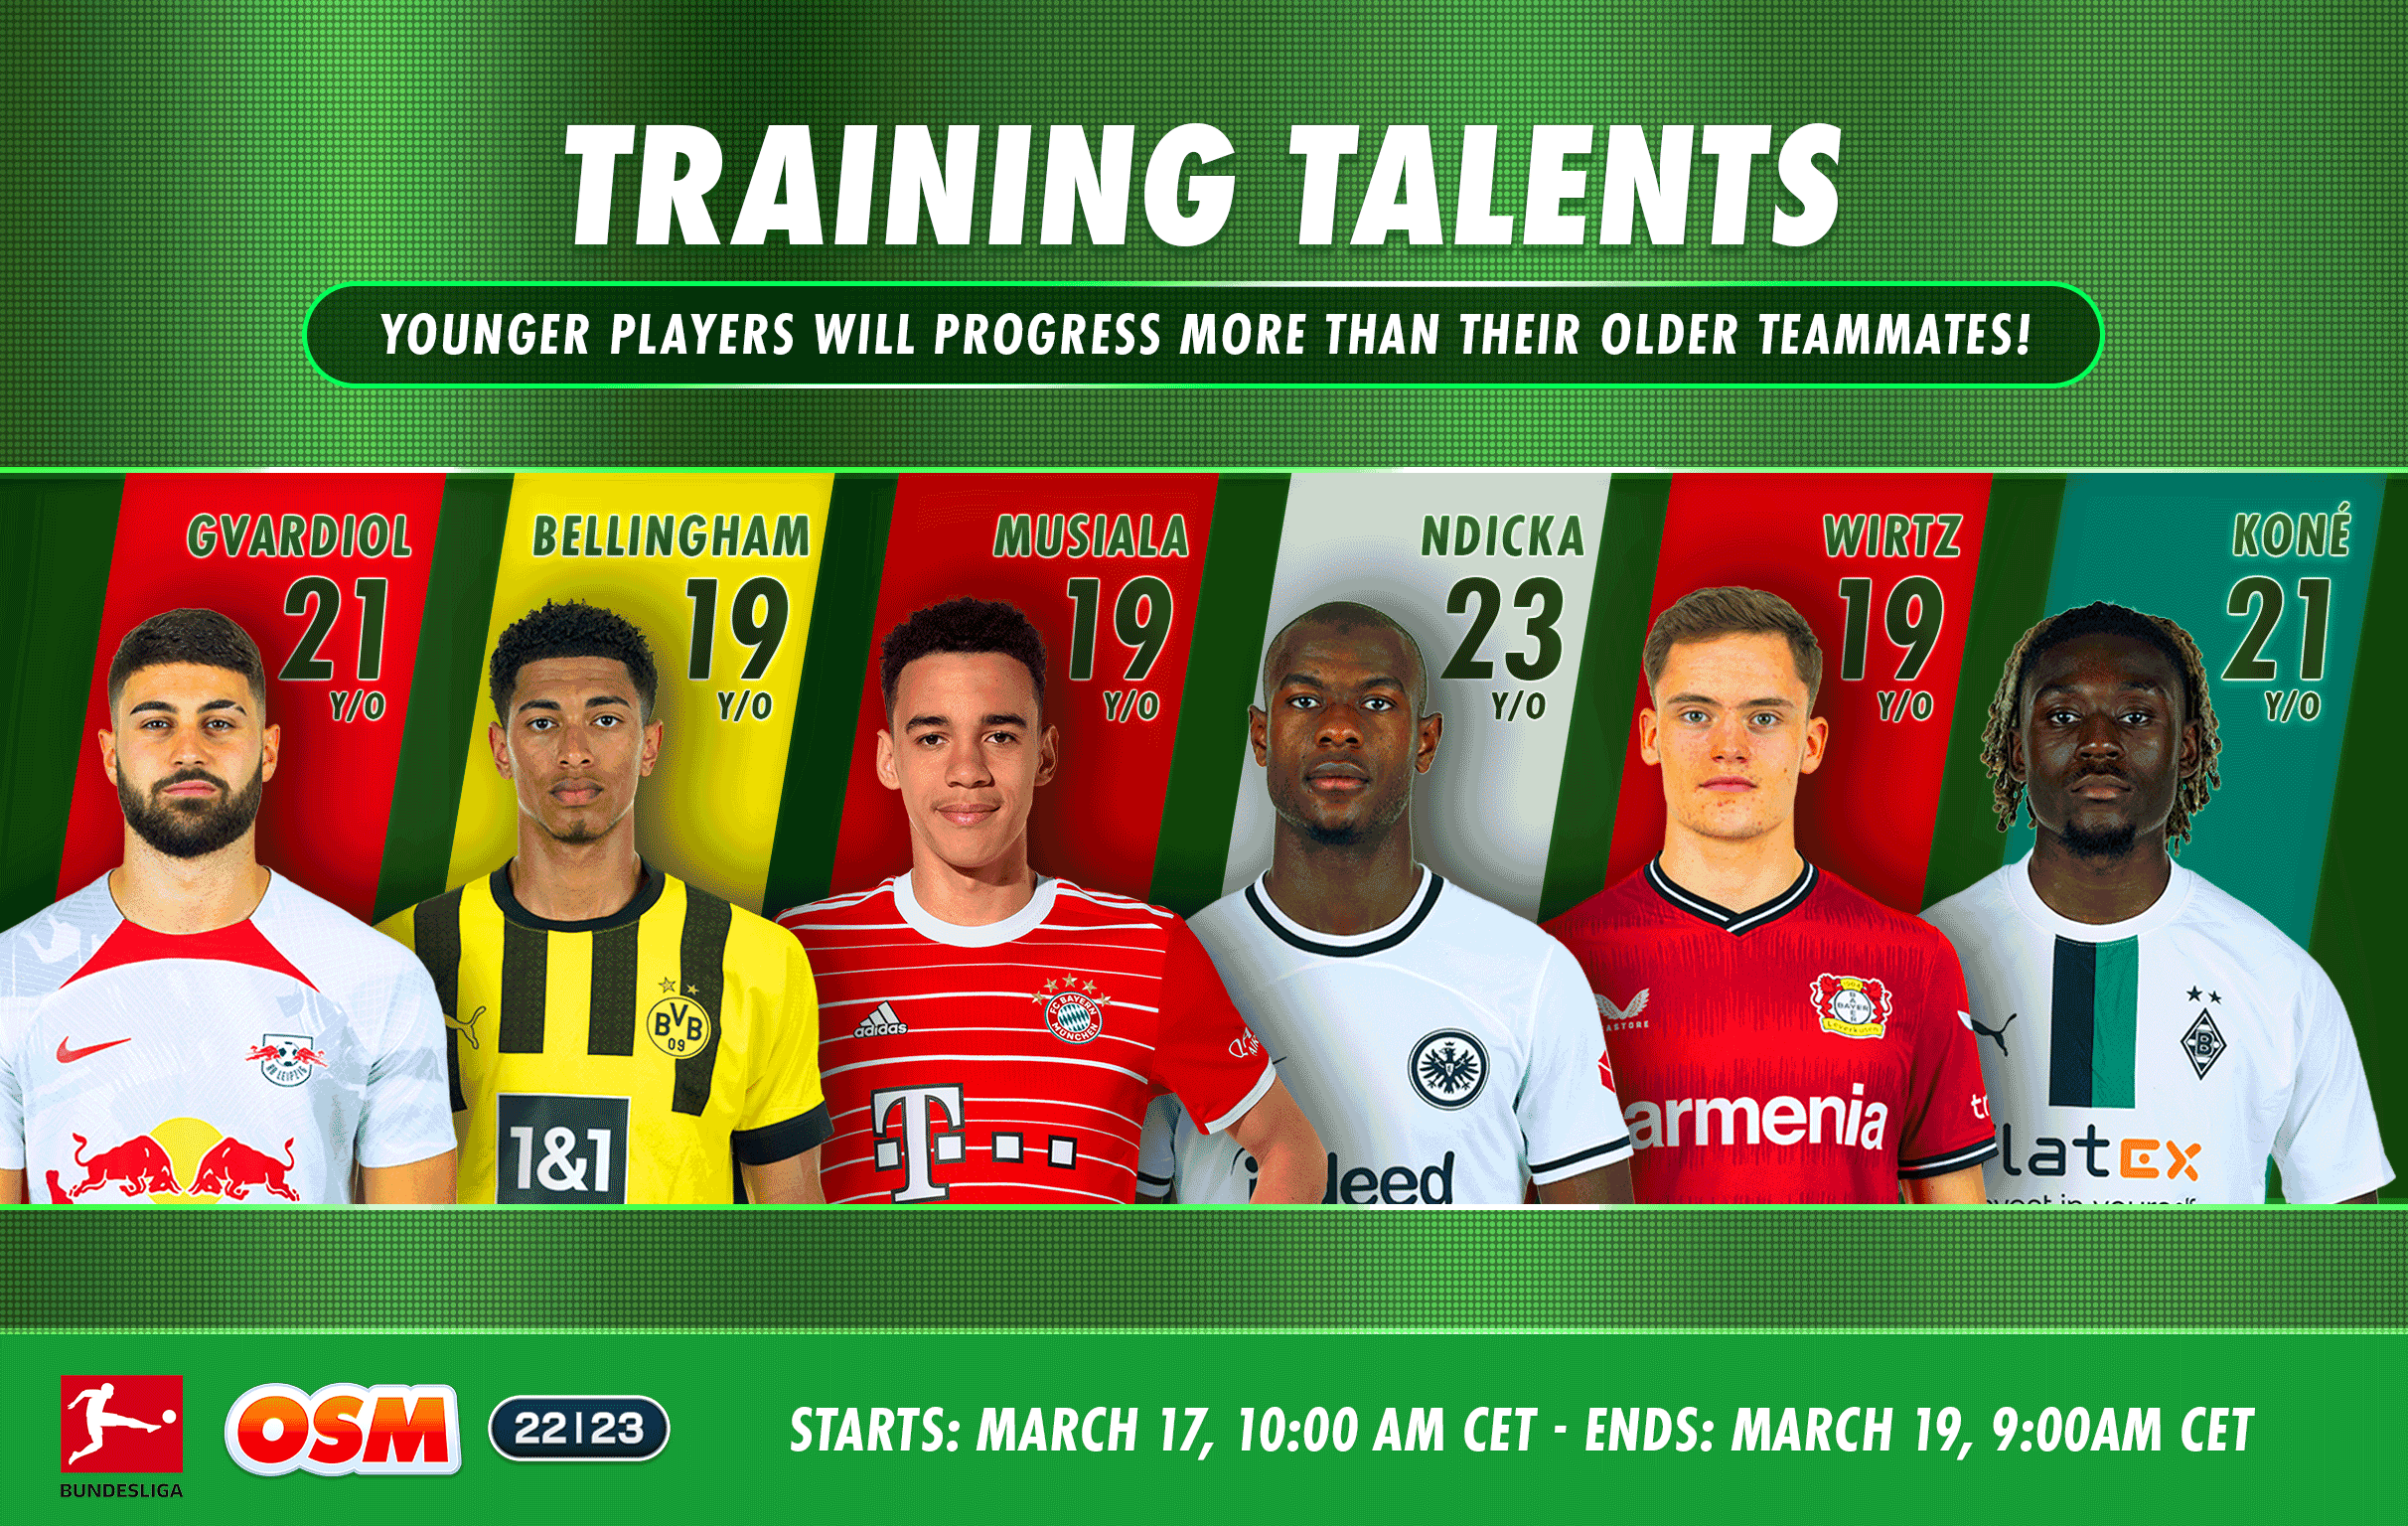 Forum_Training-Talents_REDDIT.png